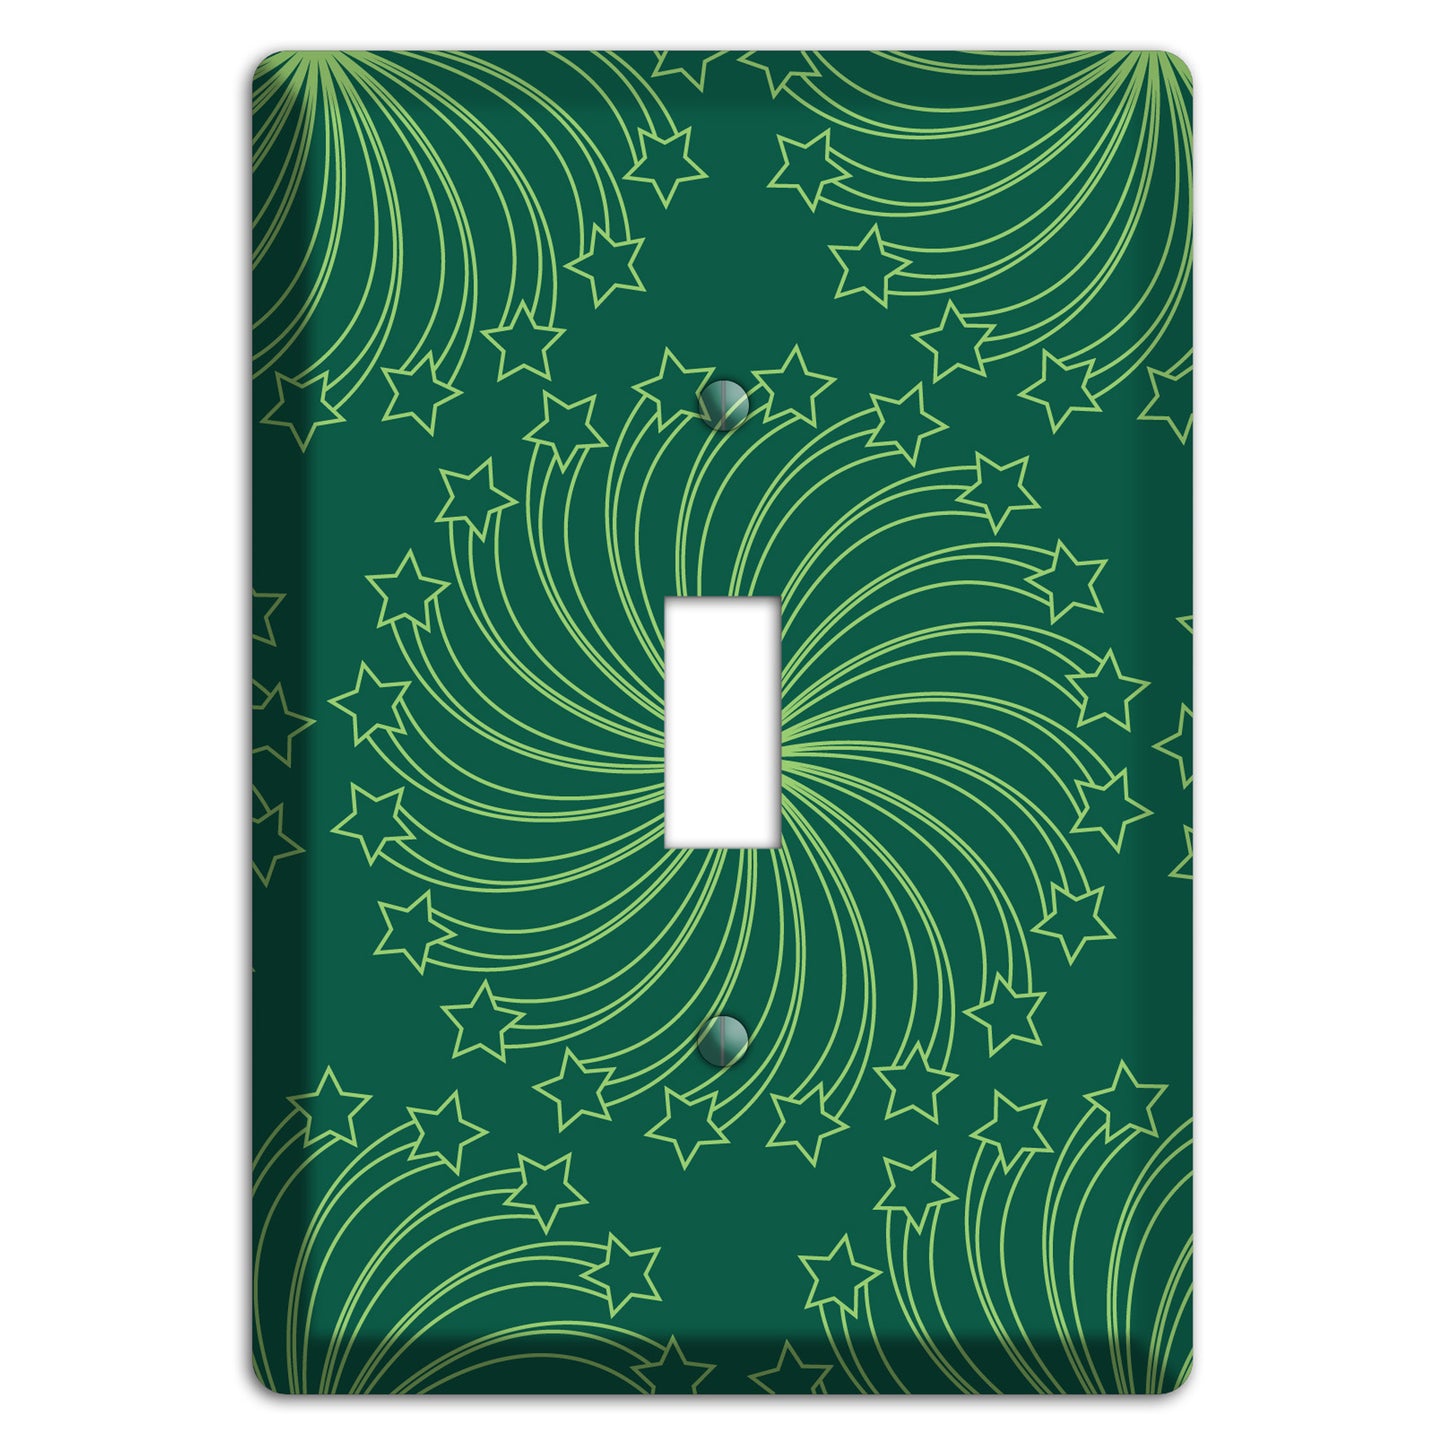 Multi Green Star Swirl Cover Plates